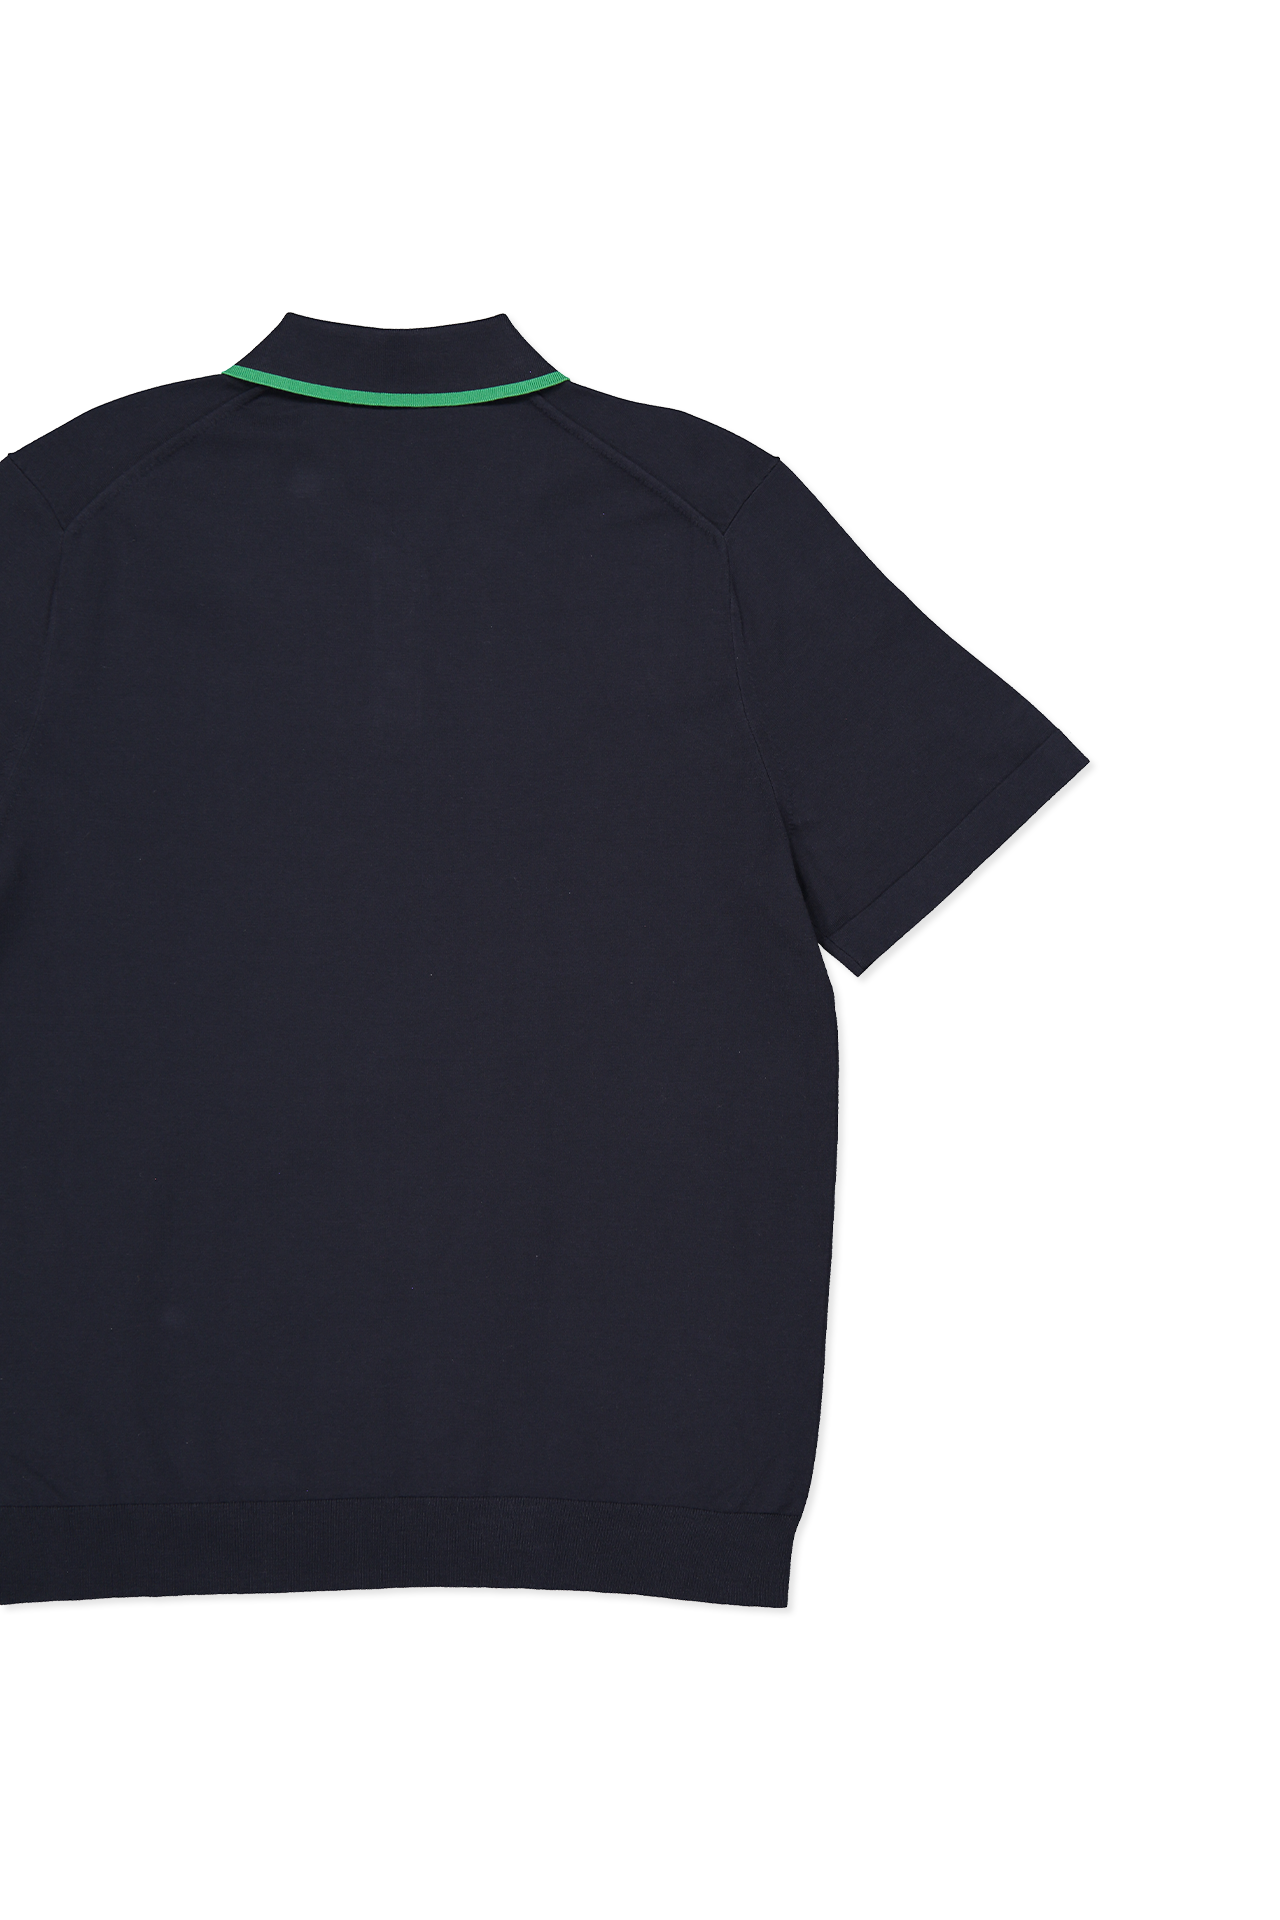 Goris Polo Shirt in Fine Bilen (7109028249715)